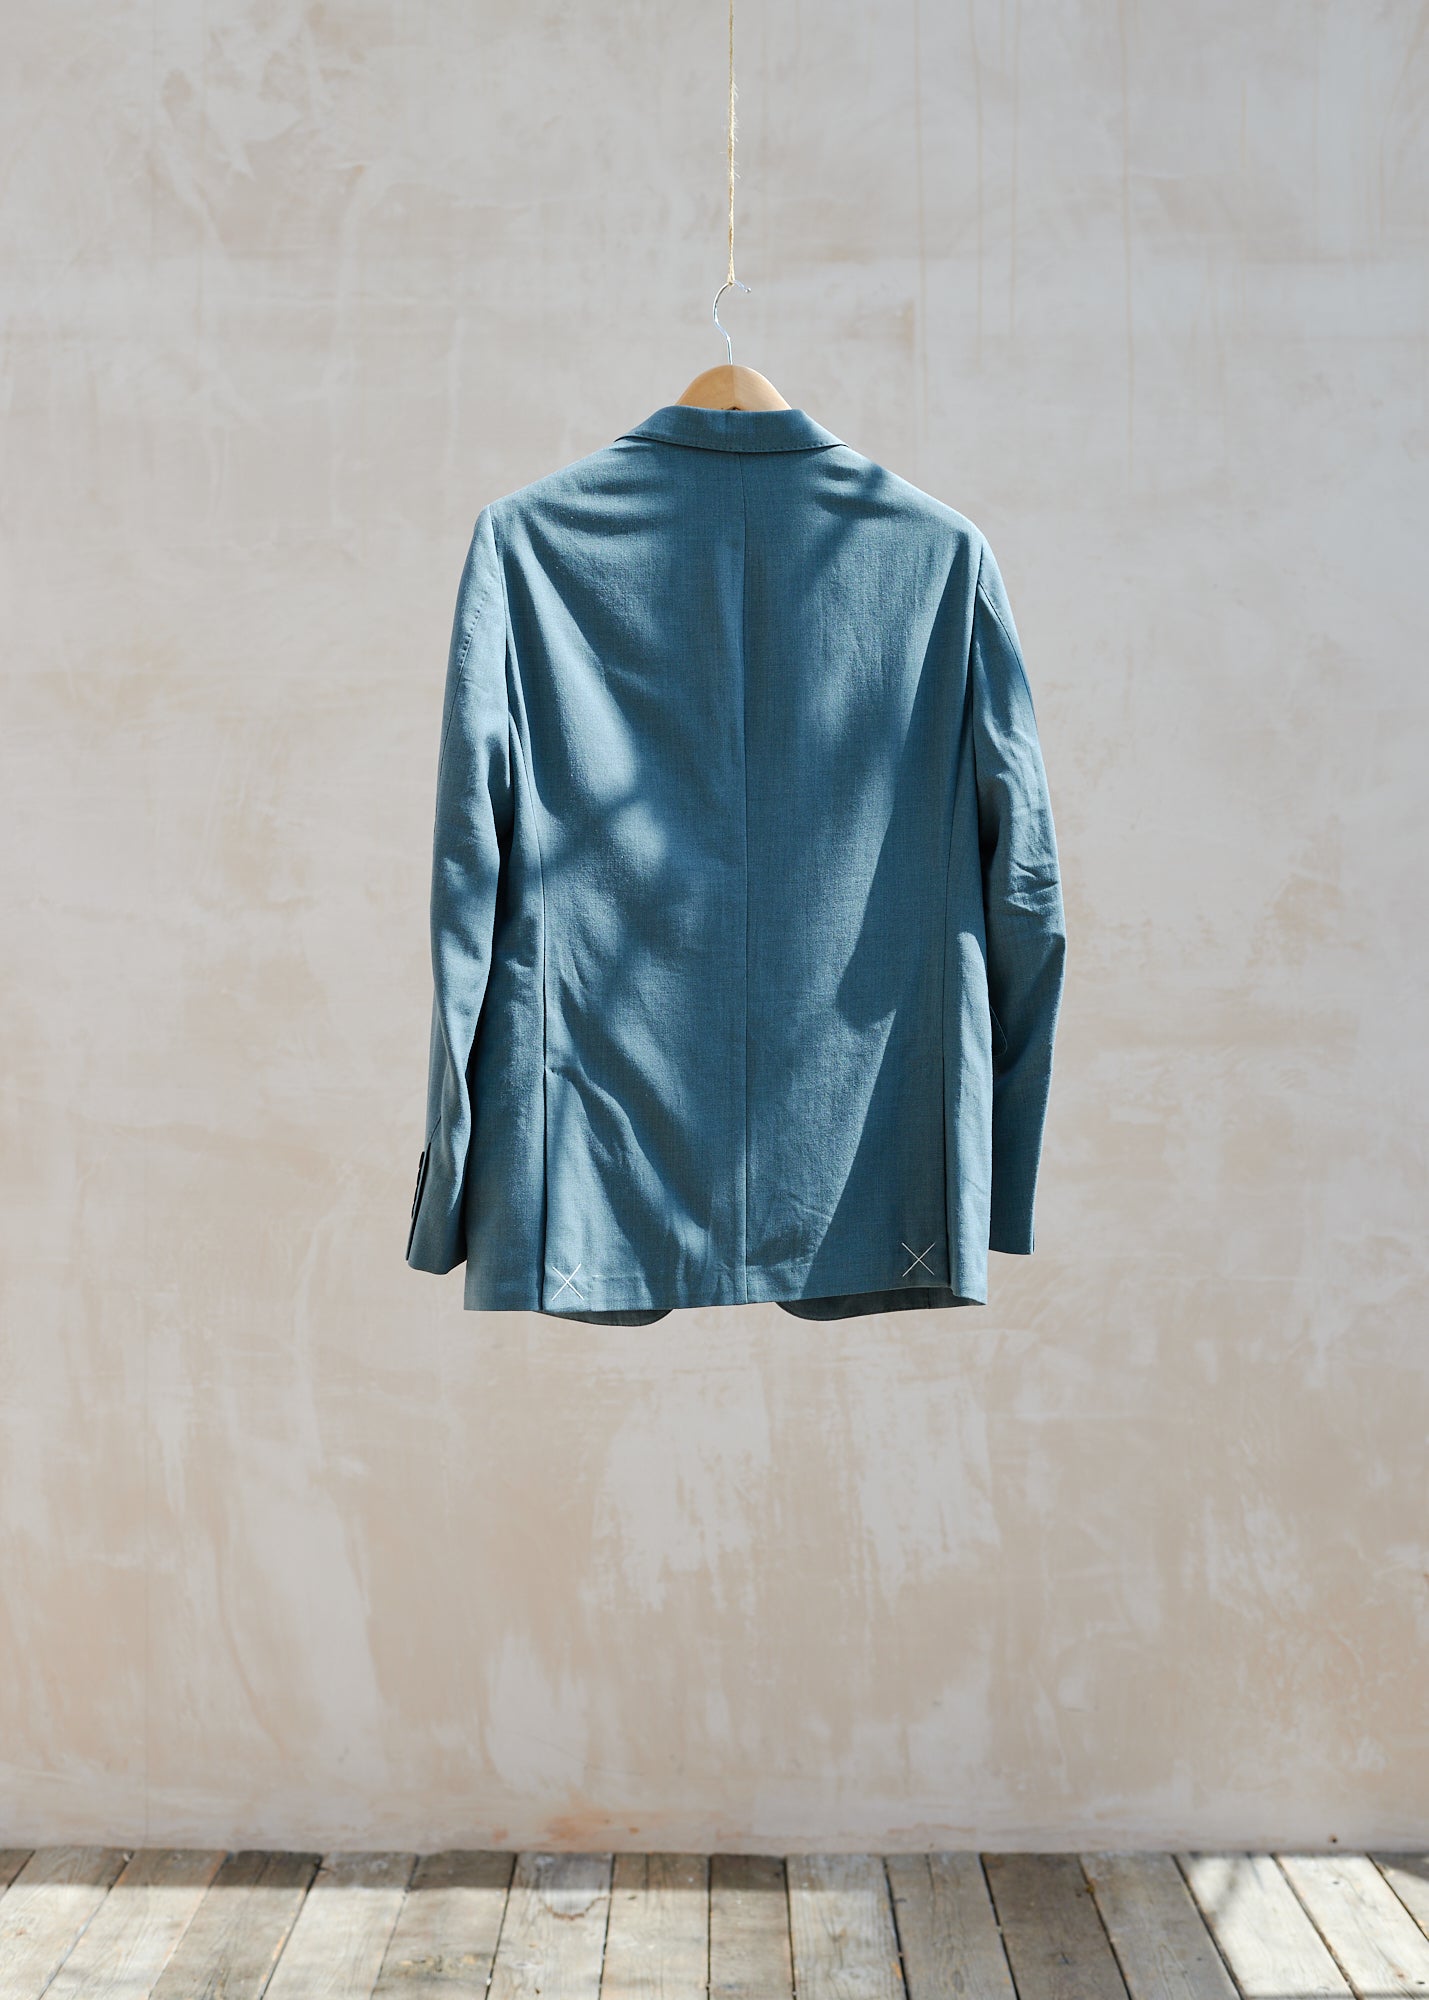 Dunhill Smart Unstructured Wool/Silk/Cotton Green Blazer / L